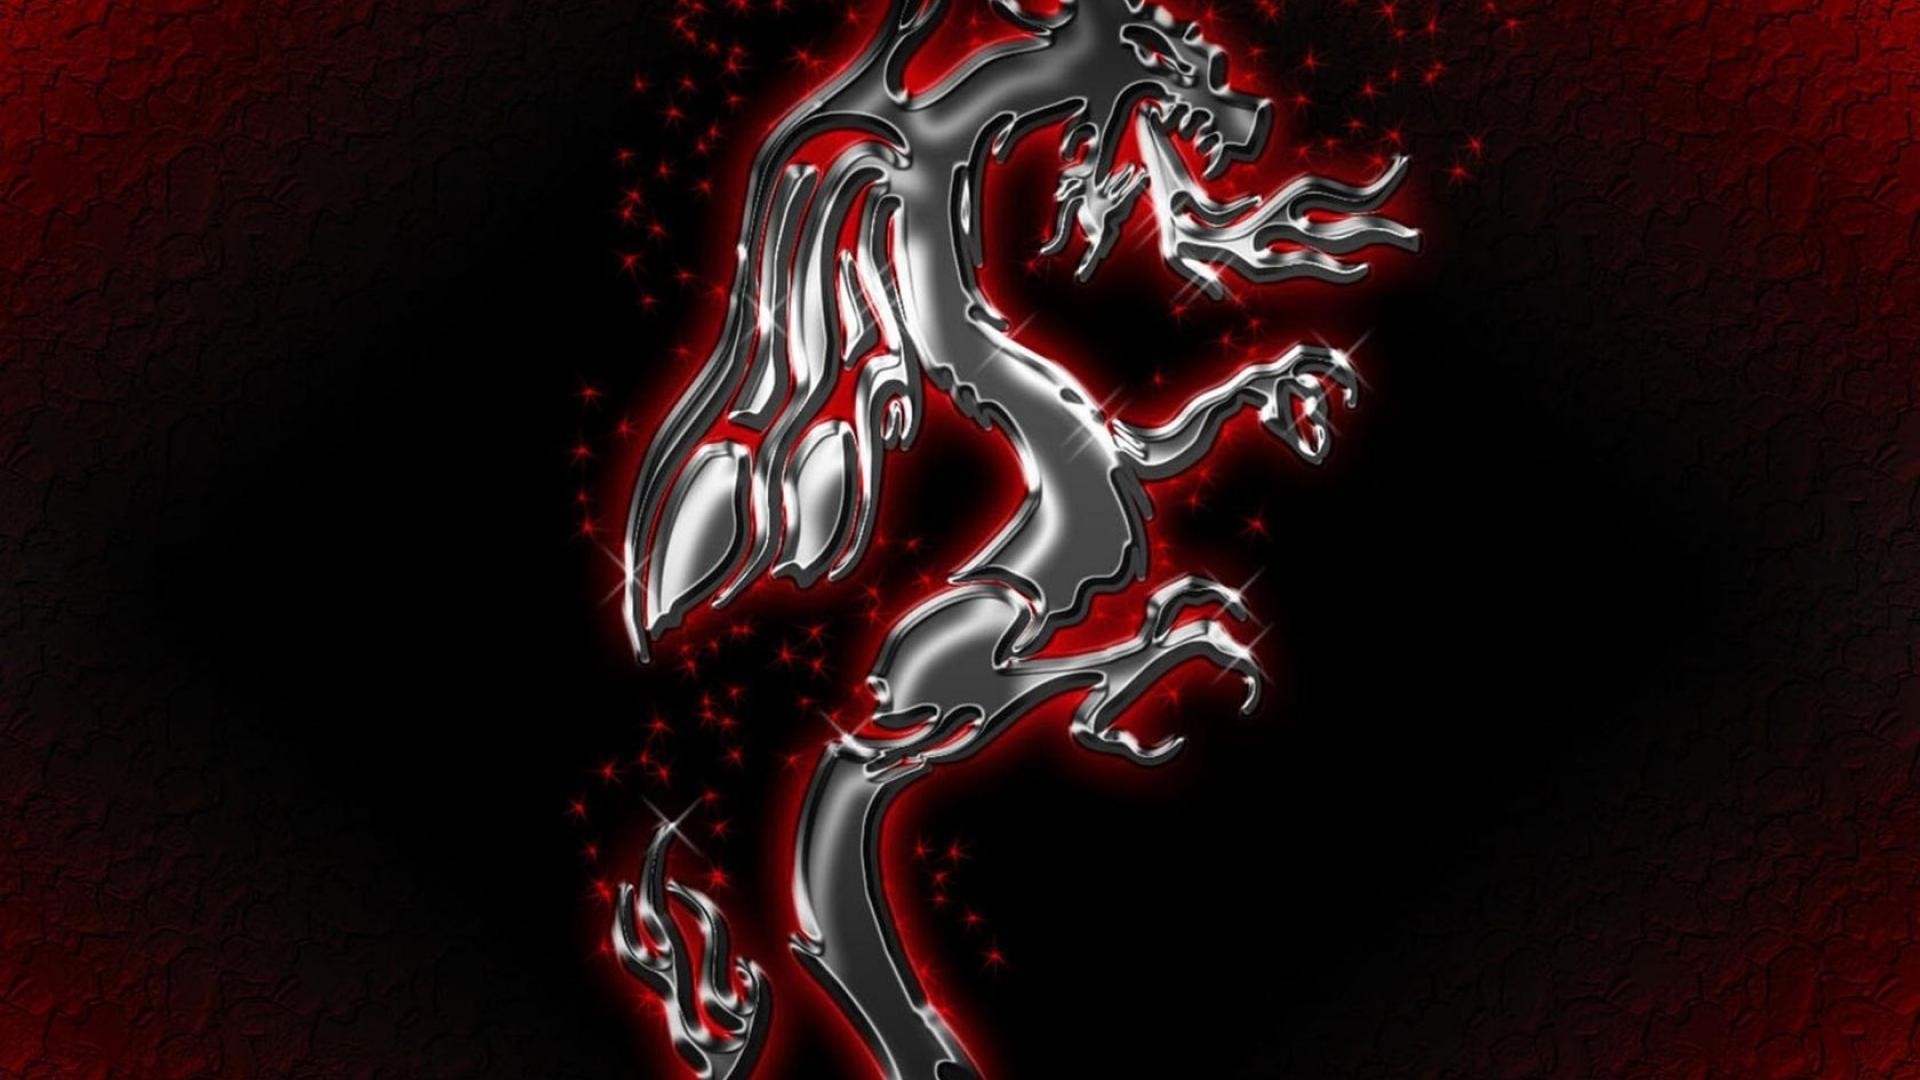 1920x1080 red eyes black dragon wallpaper - (#38397) - HQ Desktop Wallpapers .